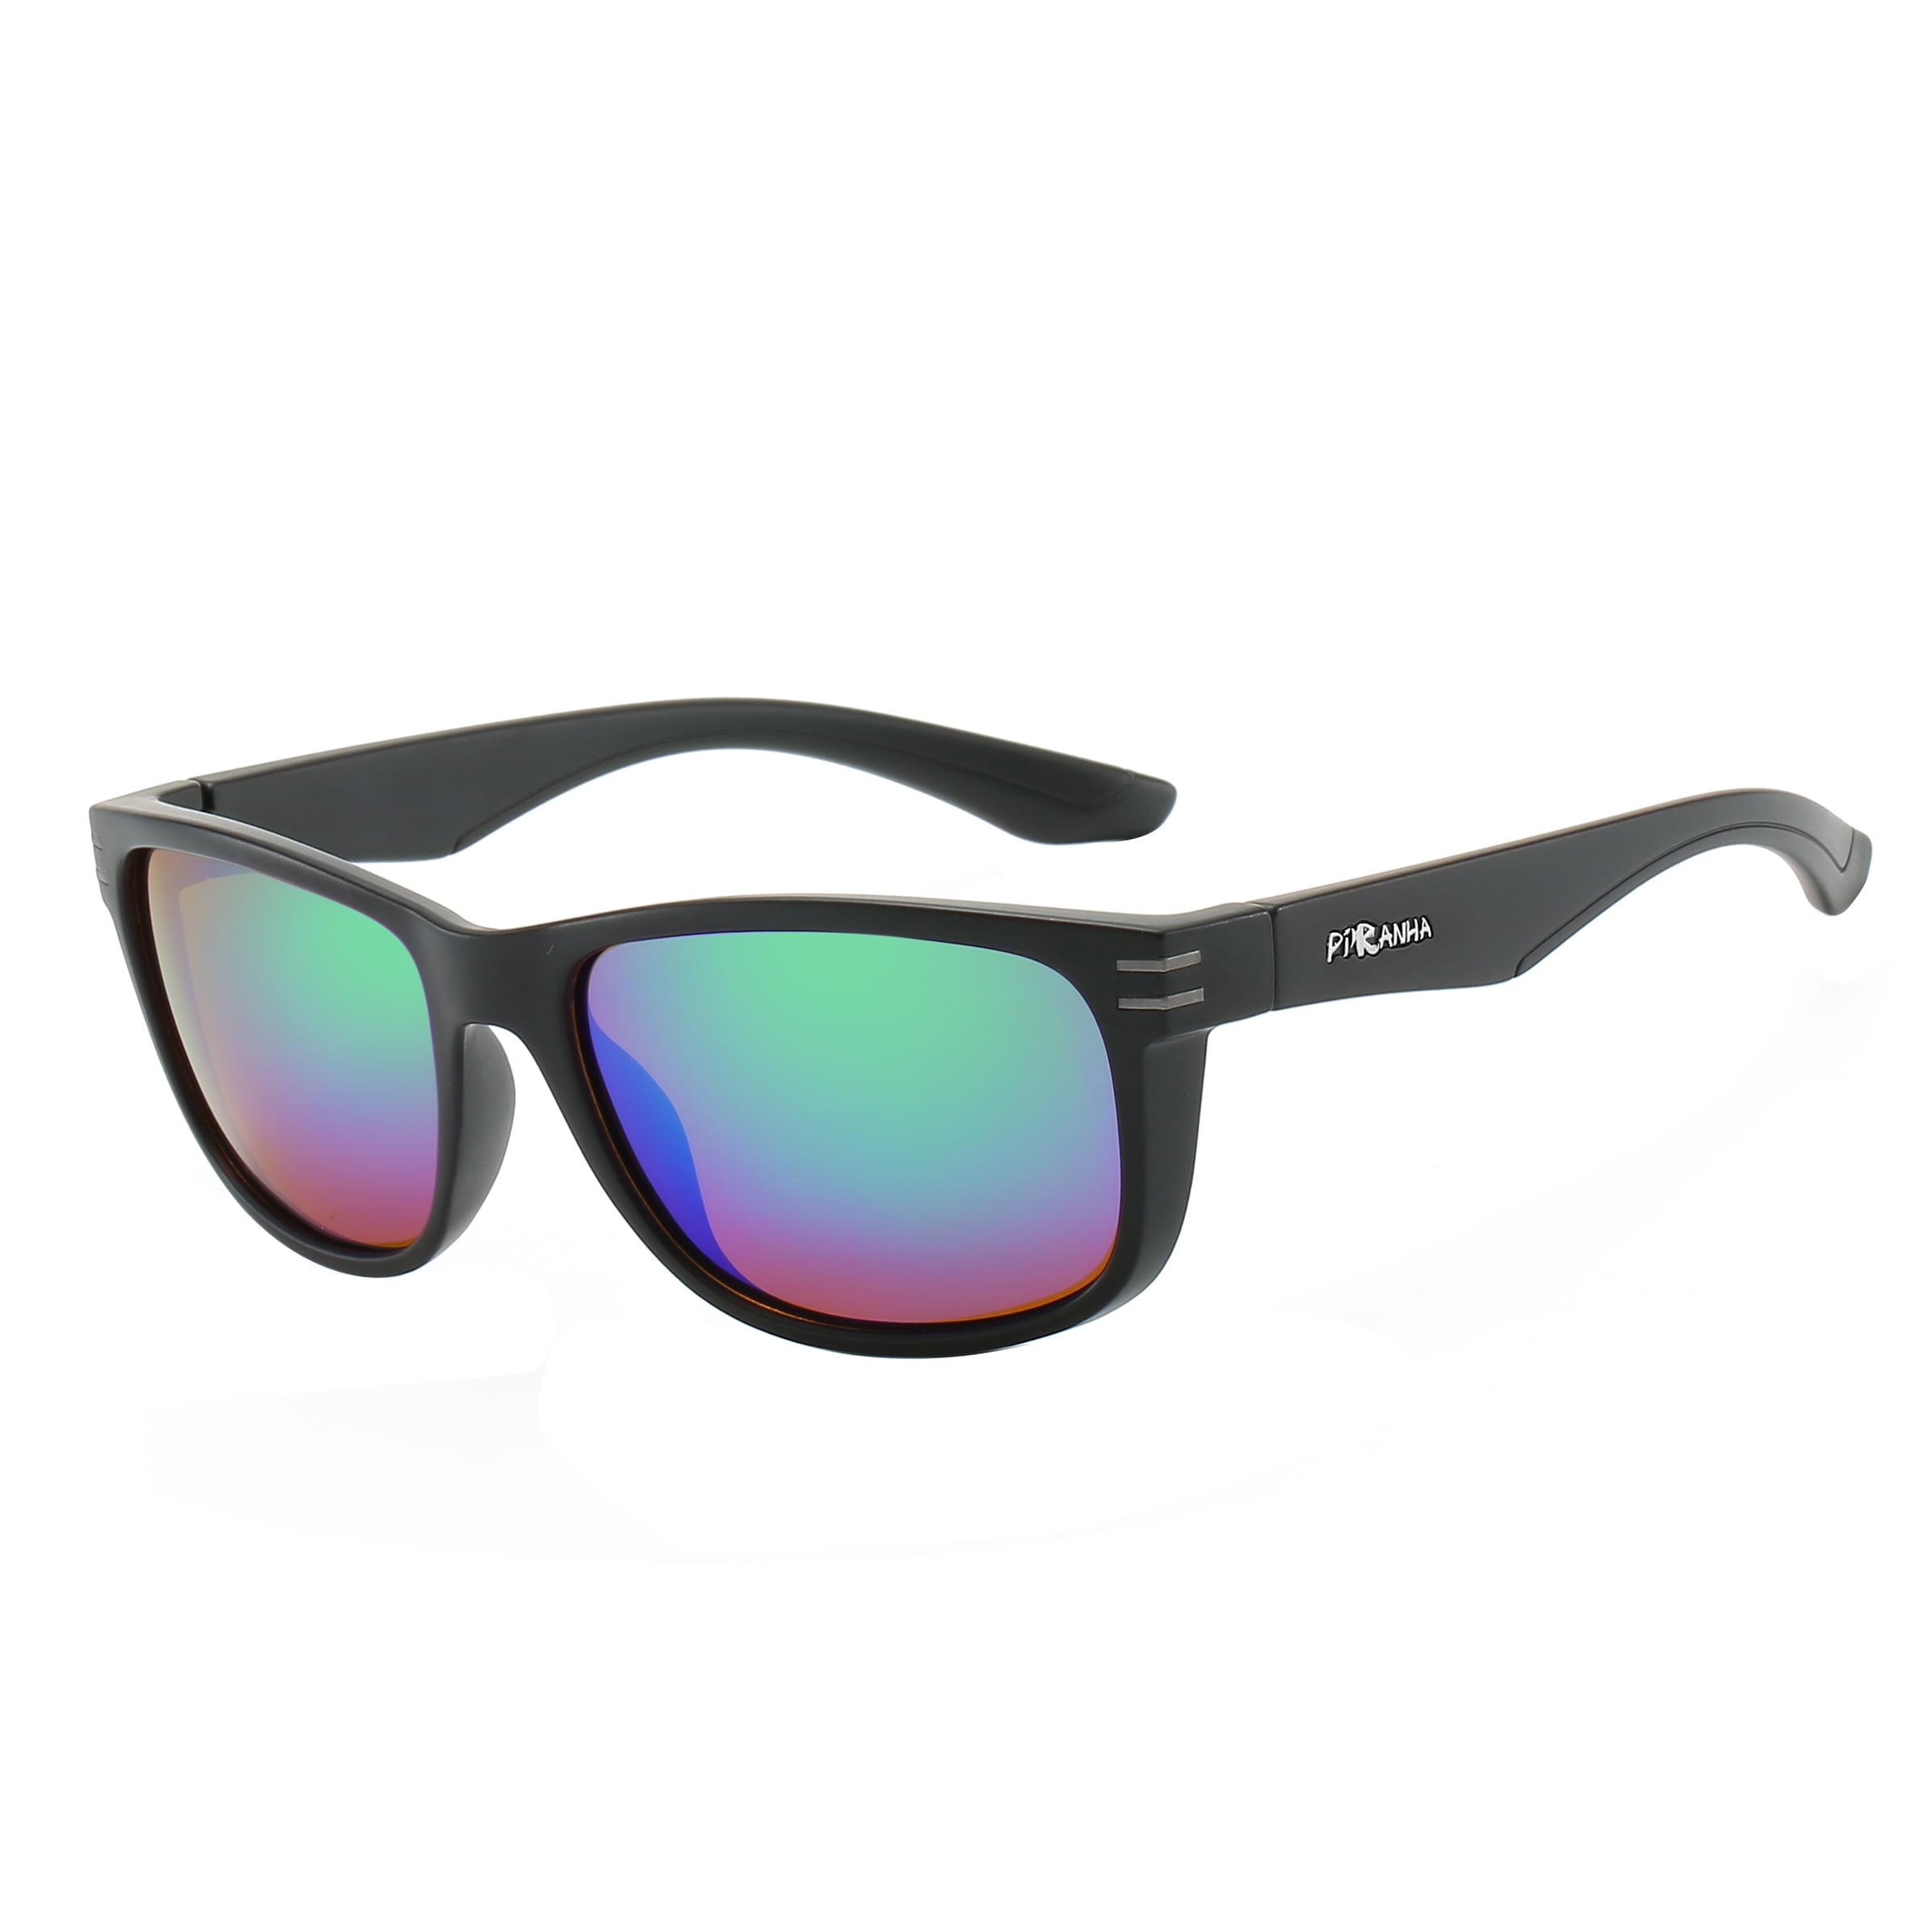 Piranha Mens Polarized Reduced Glare Sunglasses Black Style #62045